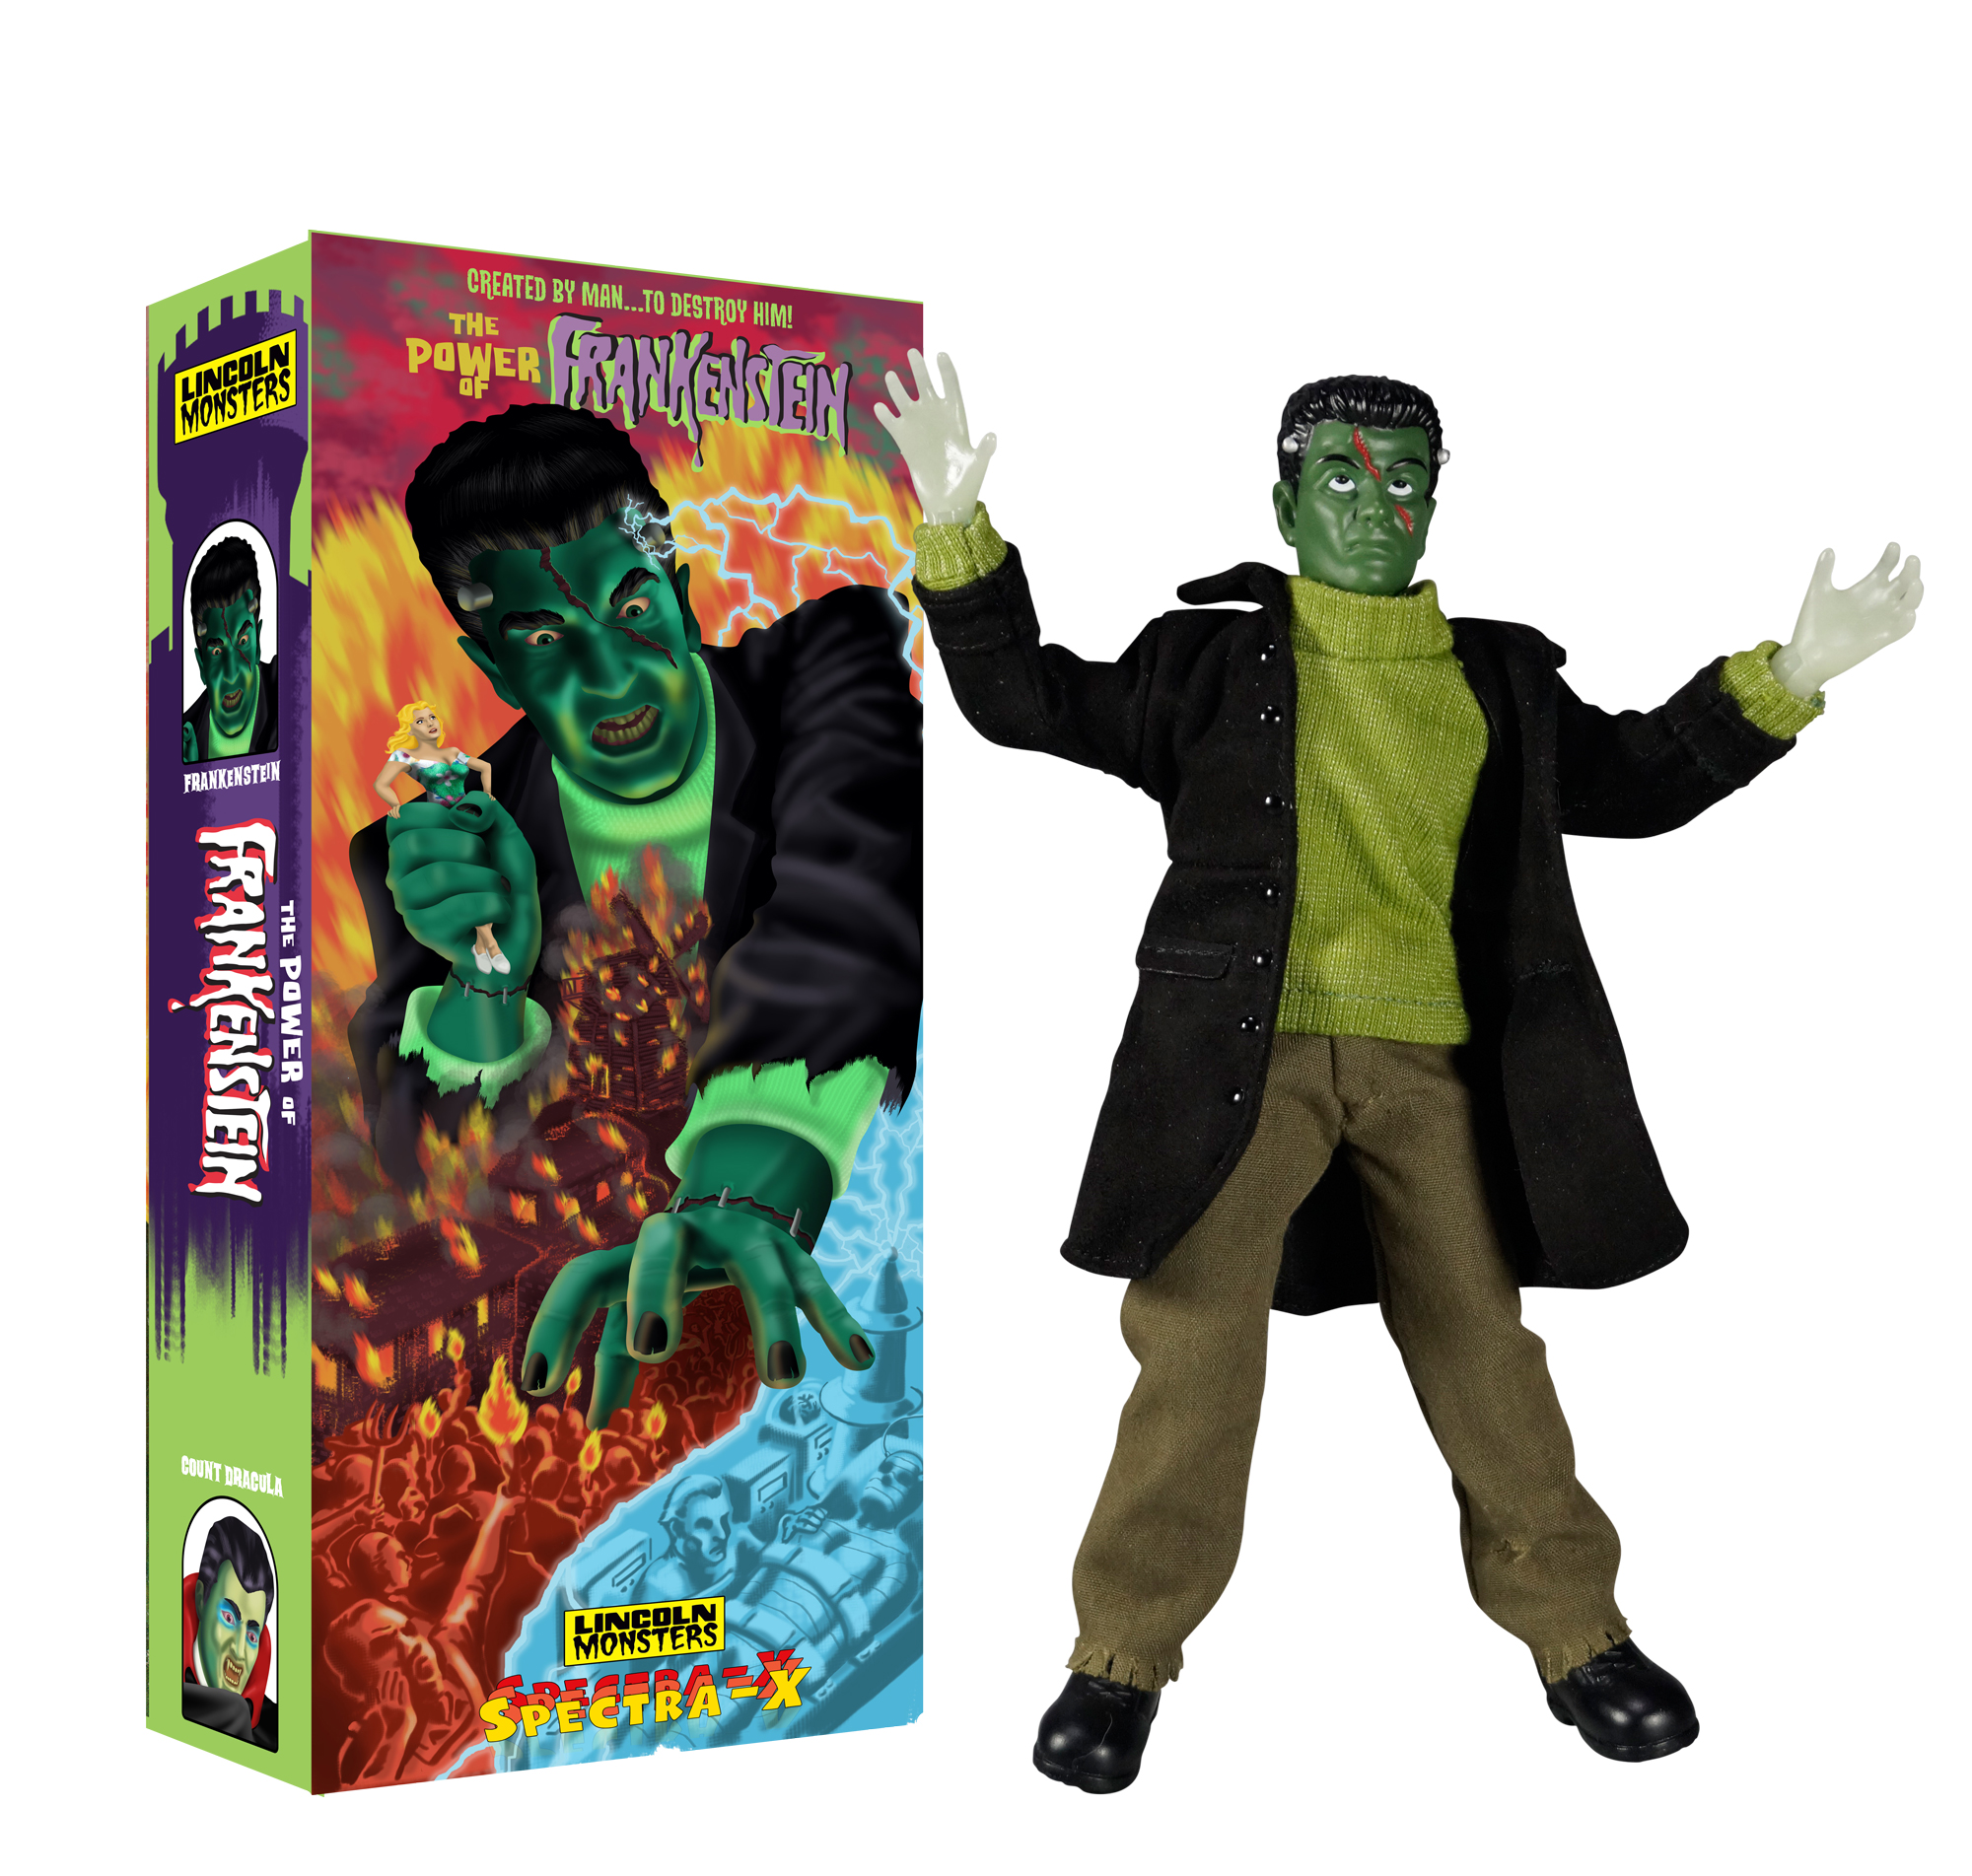 Lincoln Monsters The Power of Frankenstein